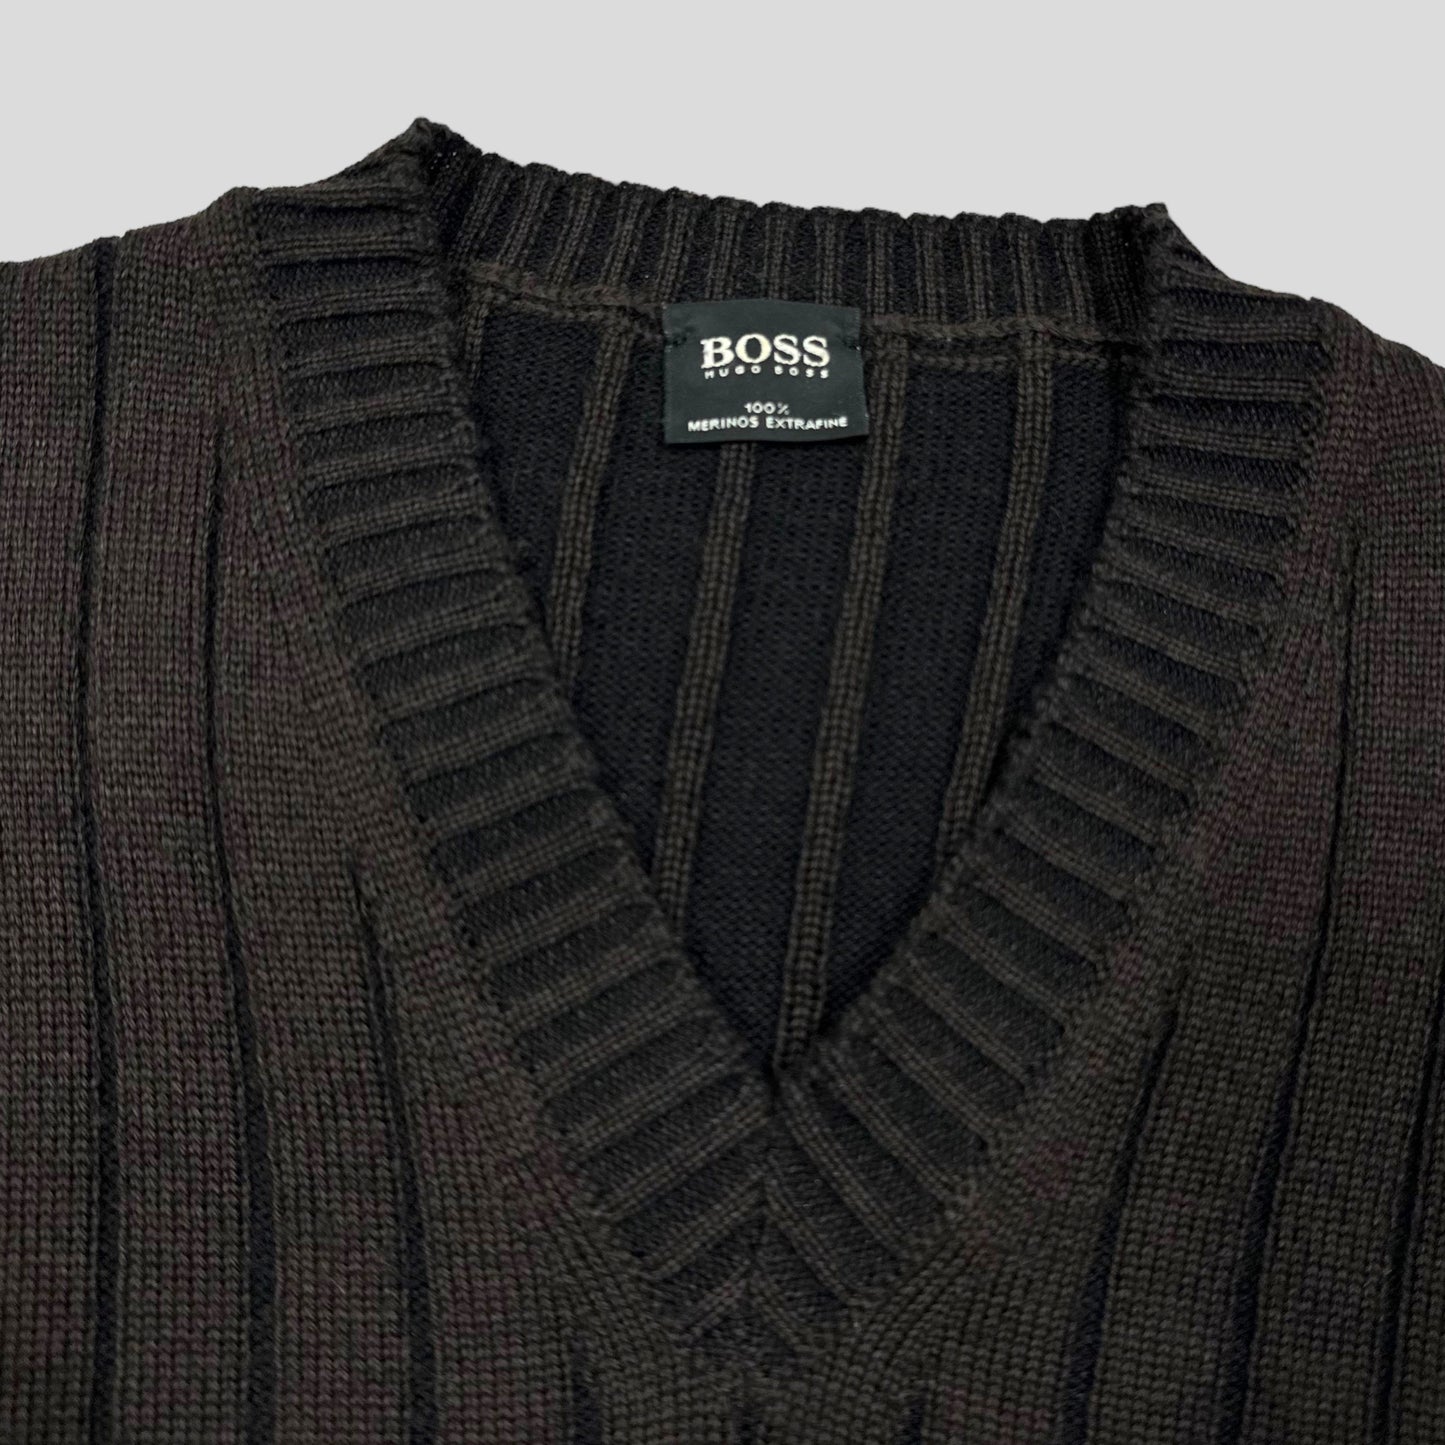 Hugo Boss 00’s Merino Wool 3D Ribbed Knit - S/M